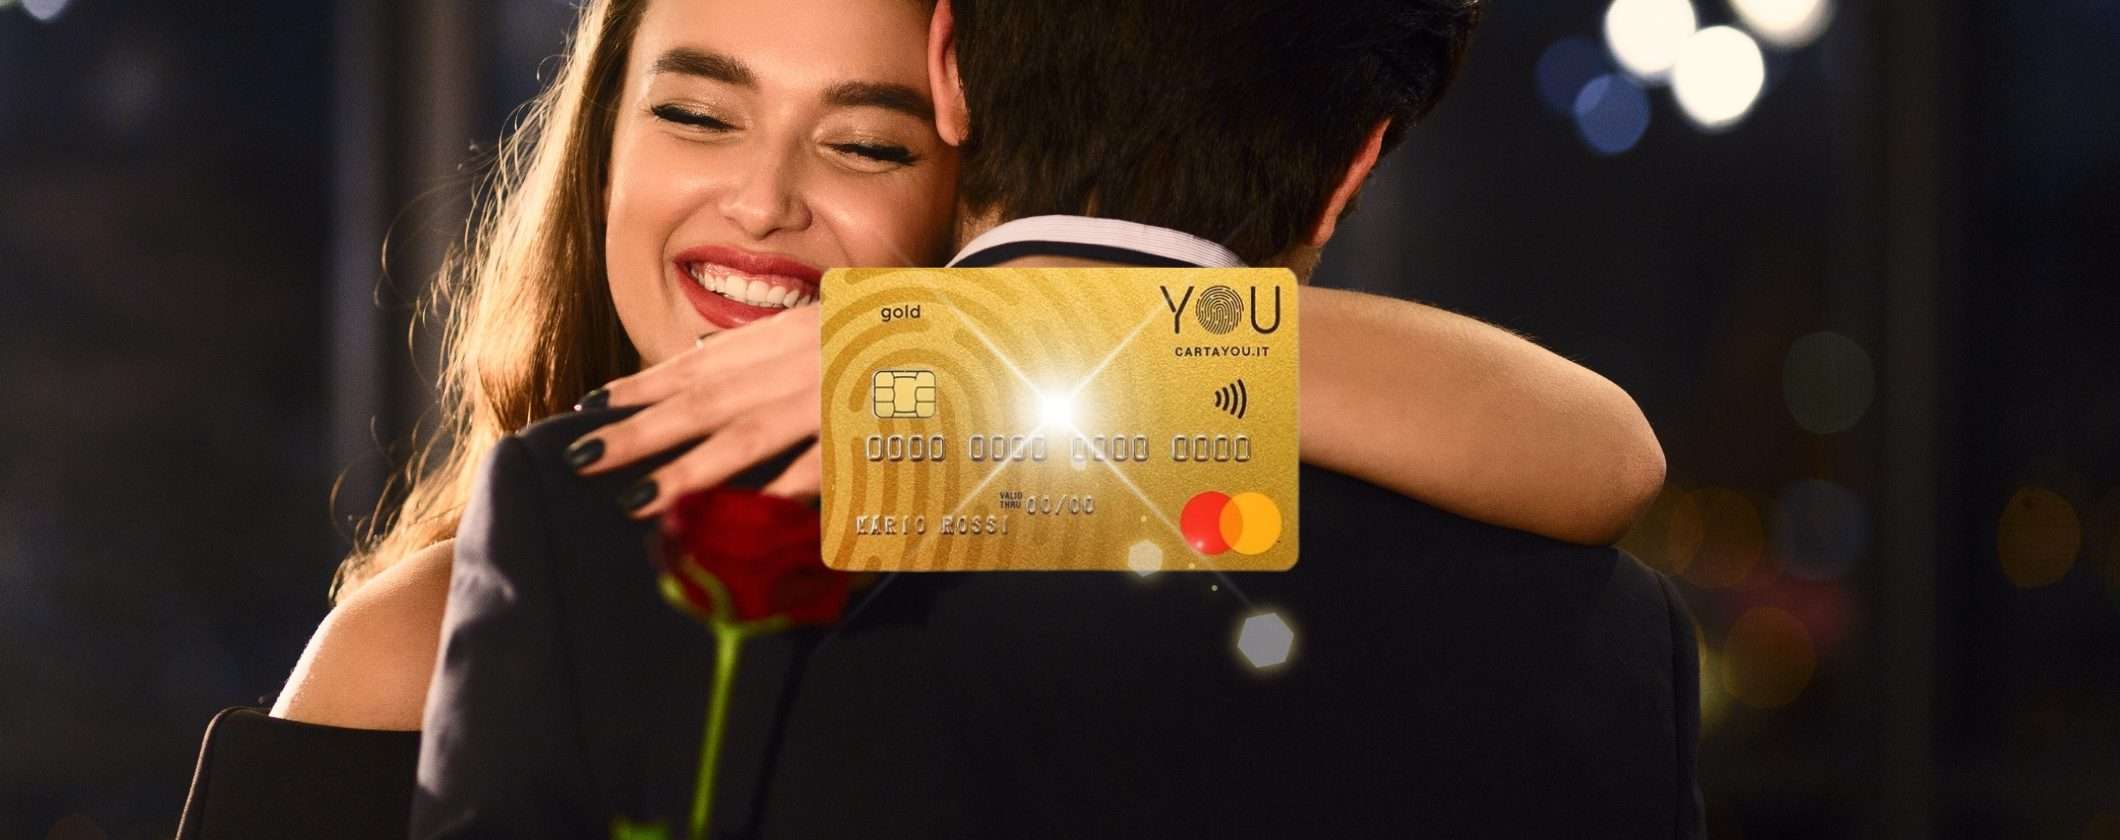 A San Valentino usa Carta YOU: paghi dopo 7 settimane